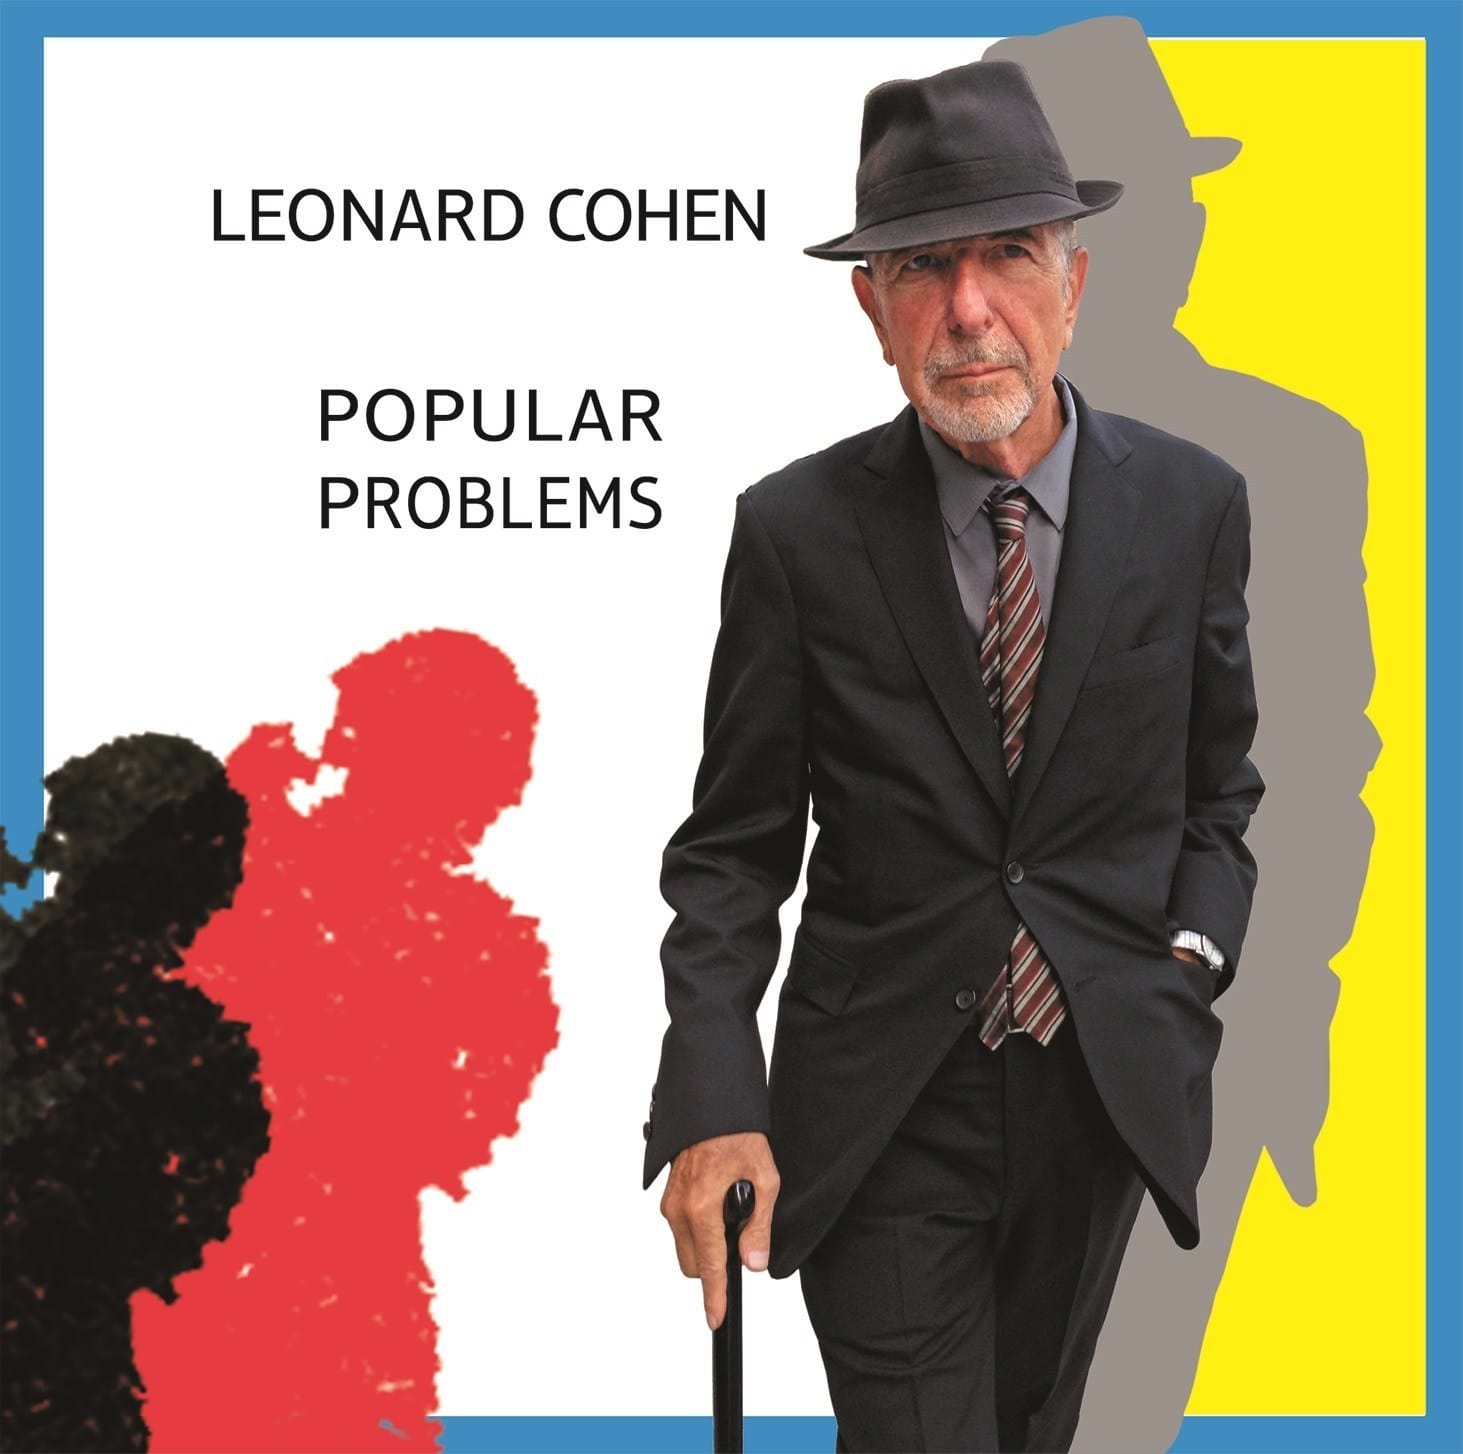 Listen To Leonard Cohen’s Popular Problems